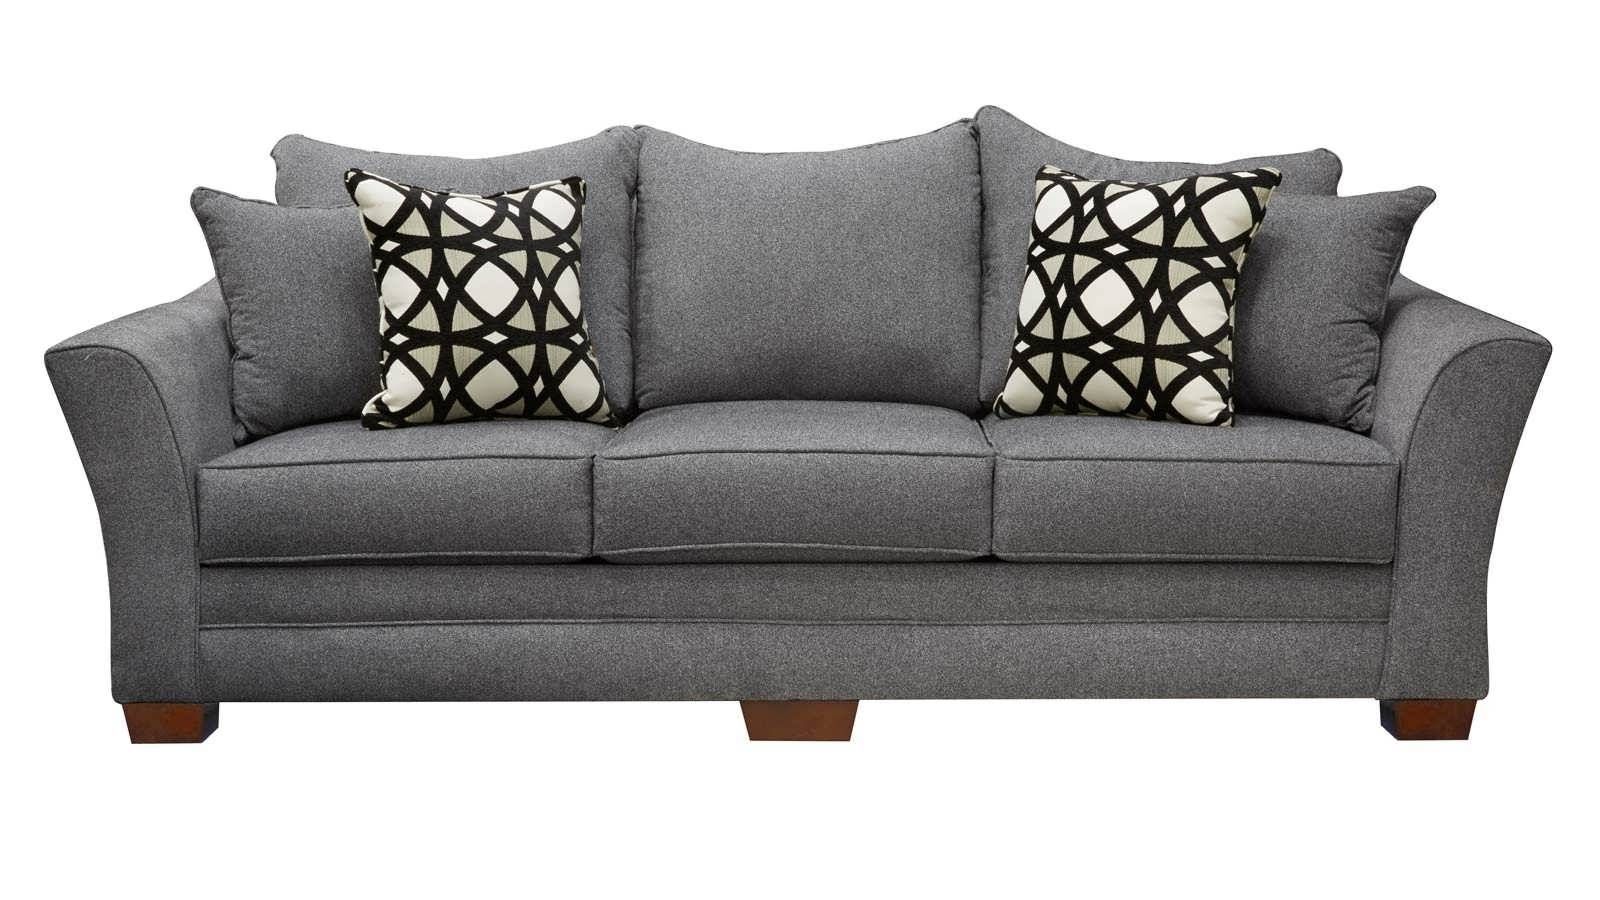 Sofa : Sofa Couch Design Affordable Tufted Sofa Brown Leather Sofa With Affordable Tufted Sofas (View 1 of 15)